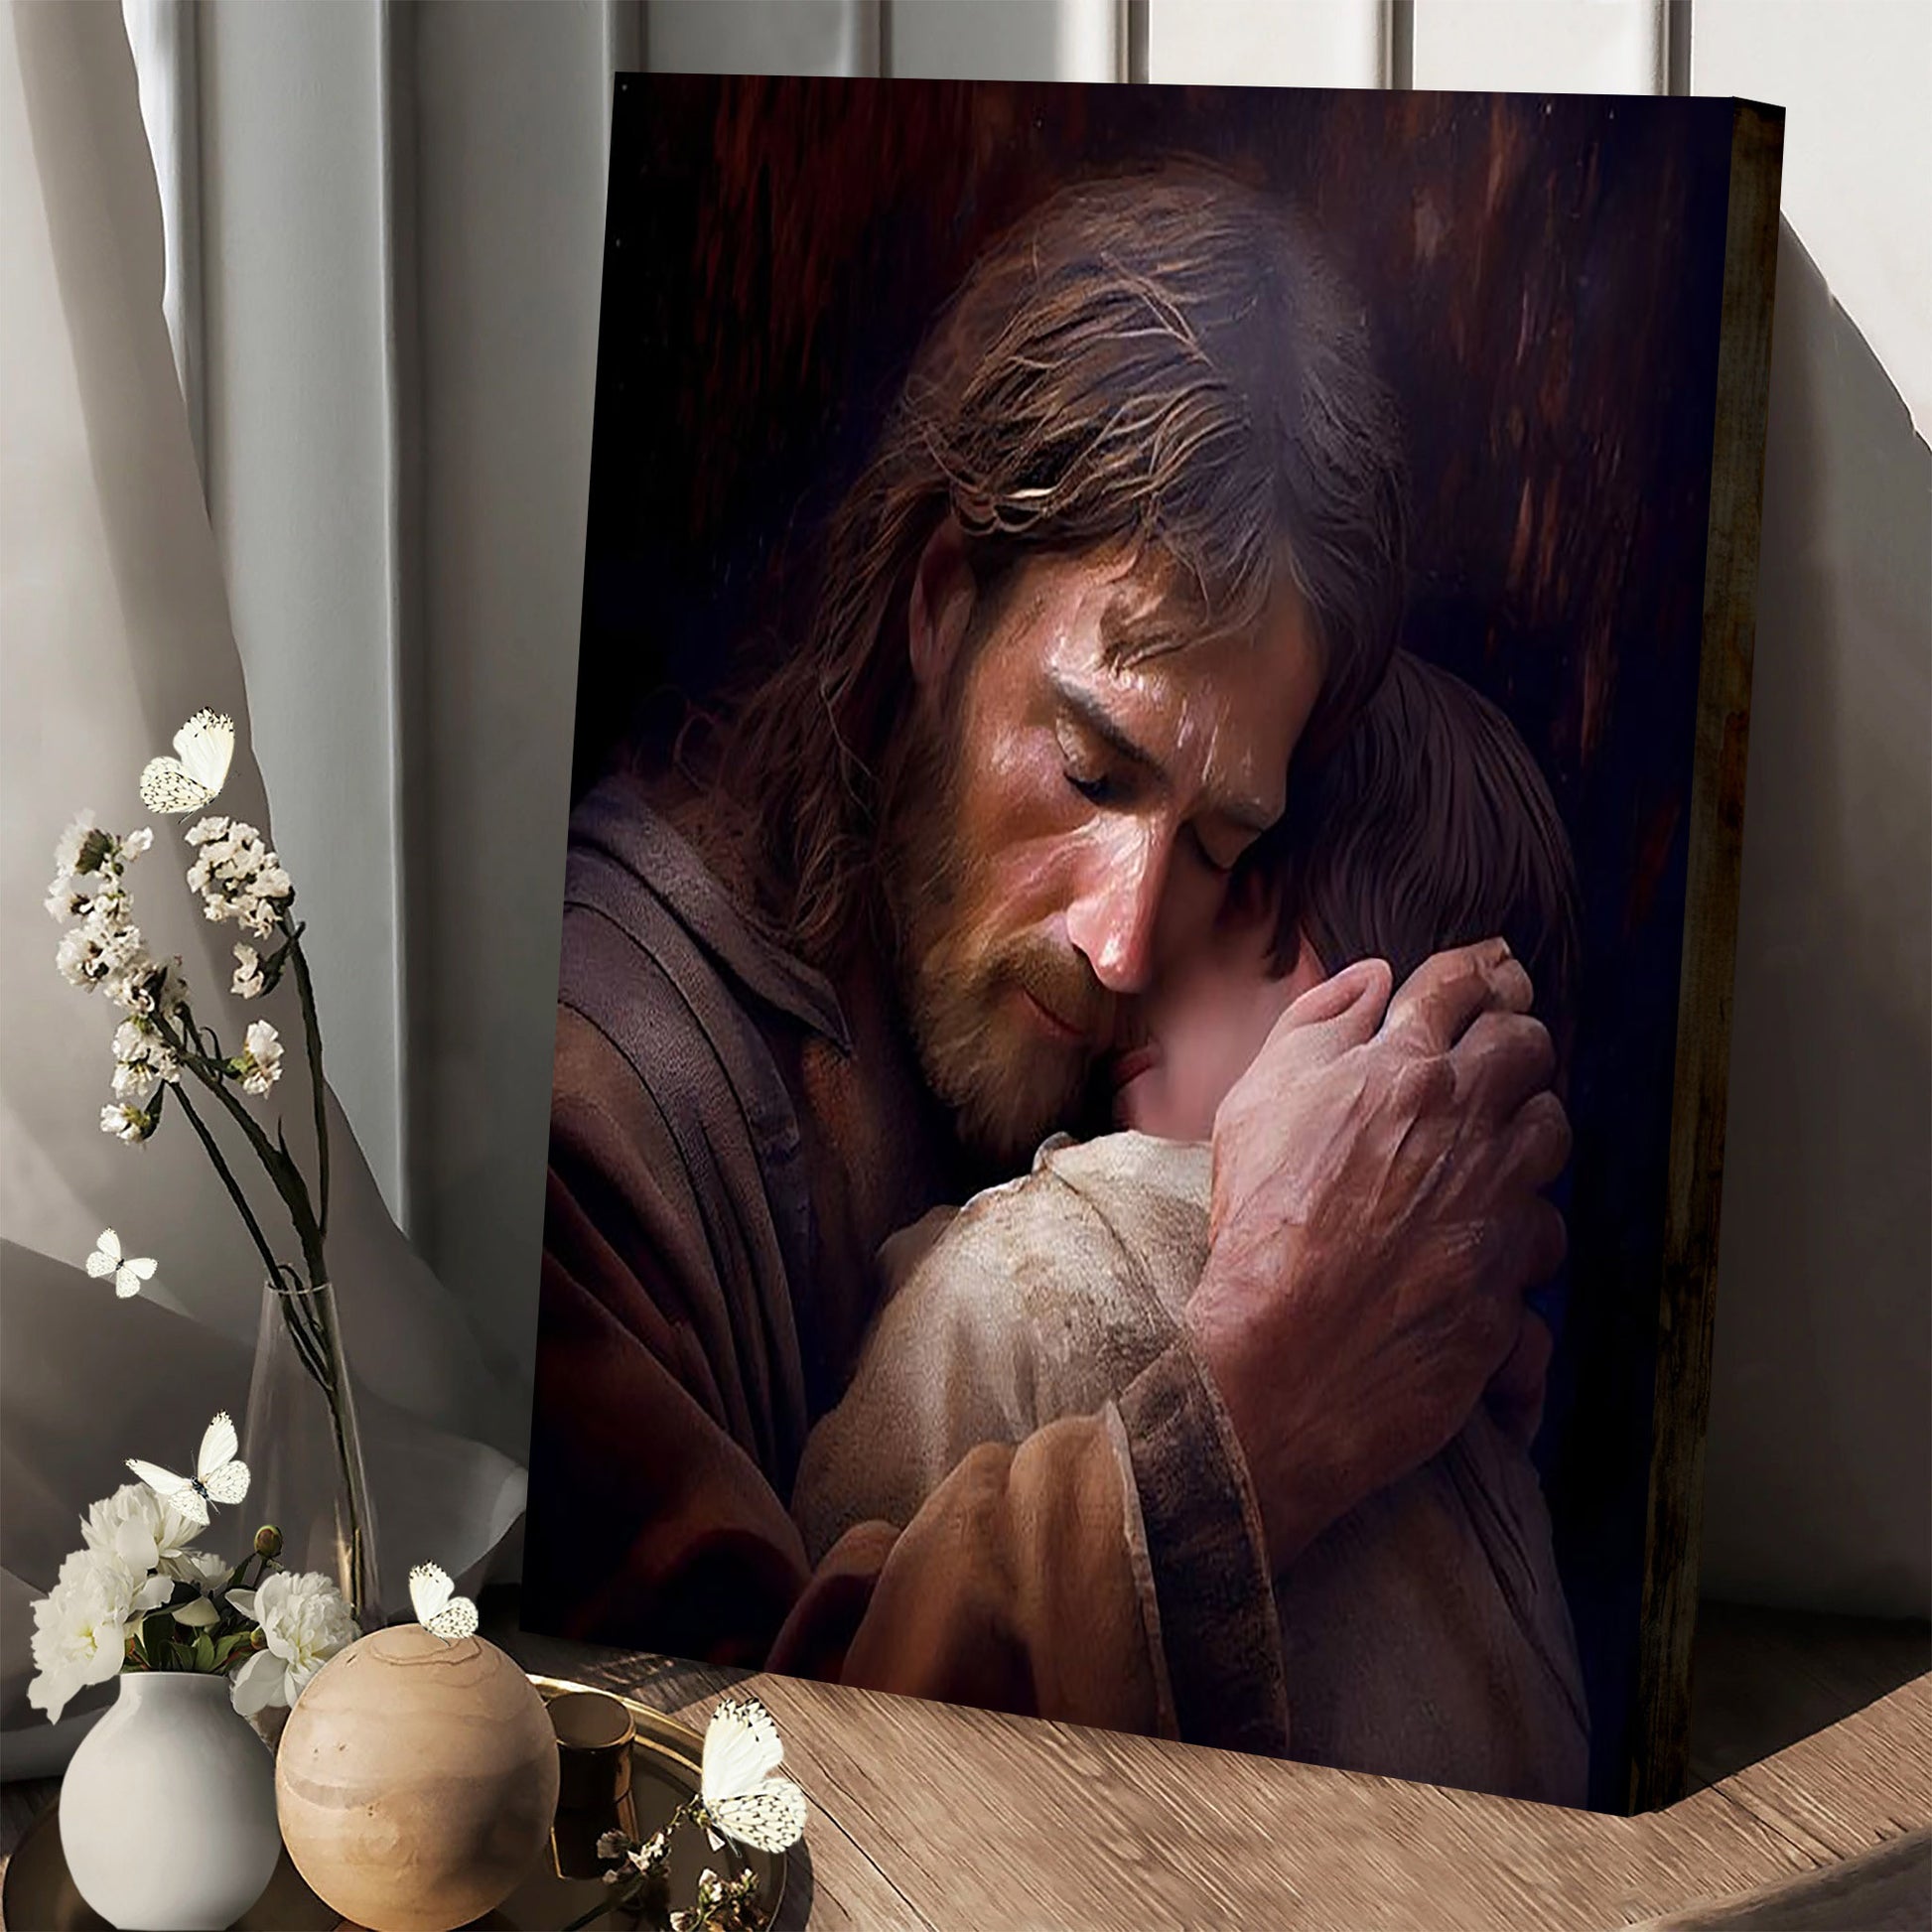 Jesus Christ And Child Canvas Prints - Jesus Christ Art - Christian Canvas Wall Decor